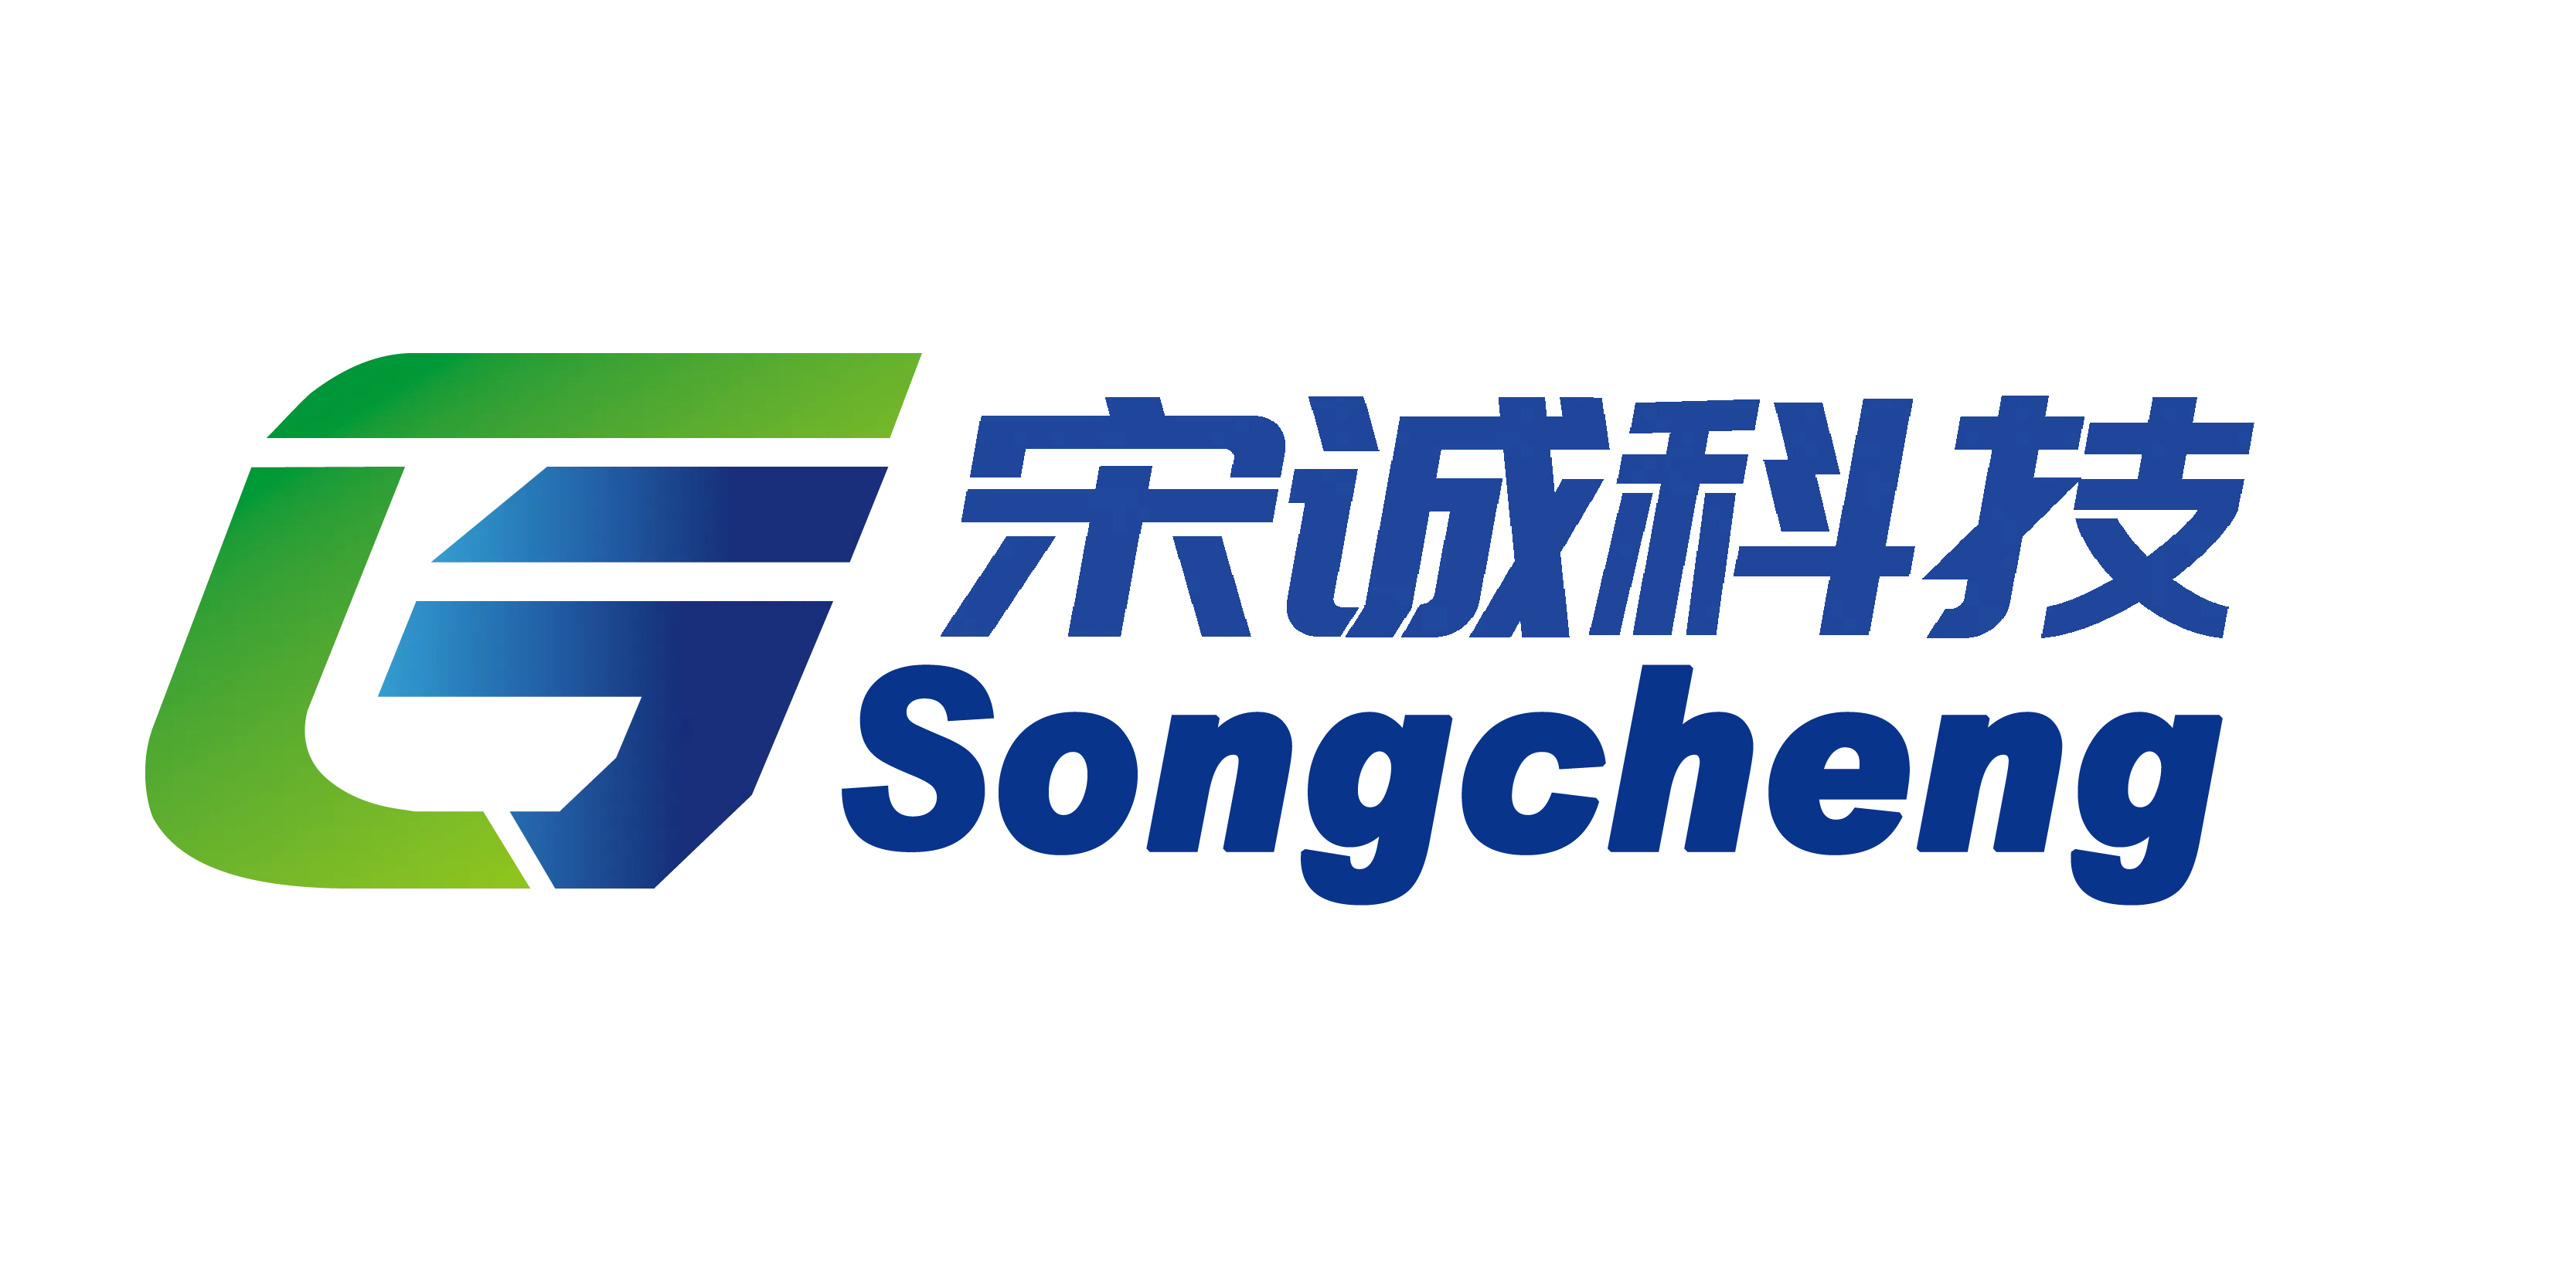 Songcheng 4th anniversay celebration